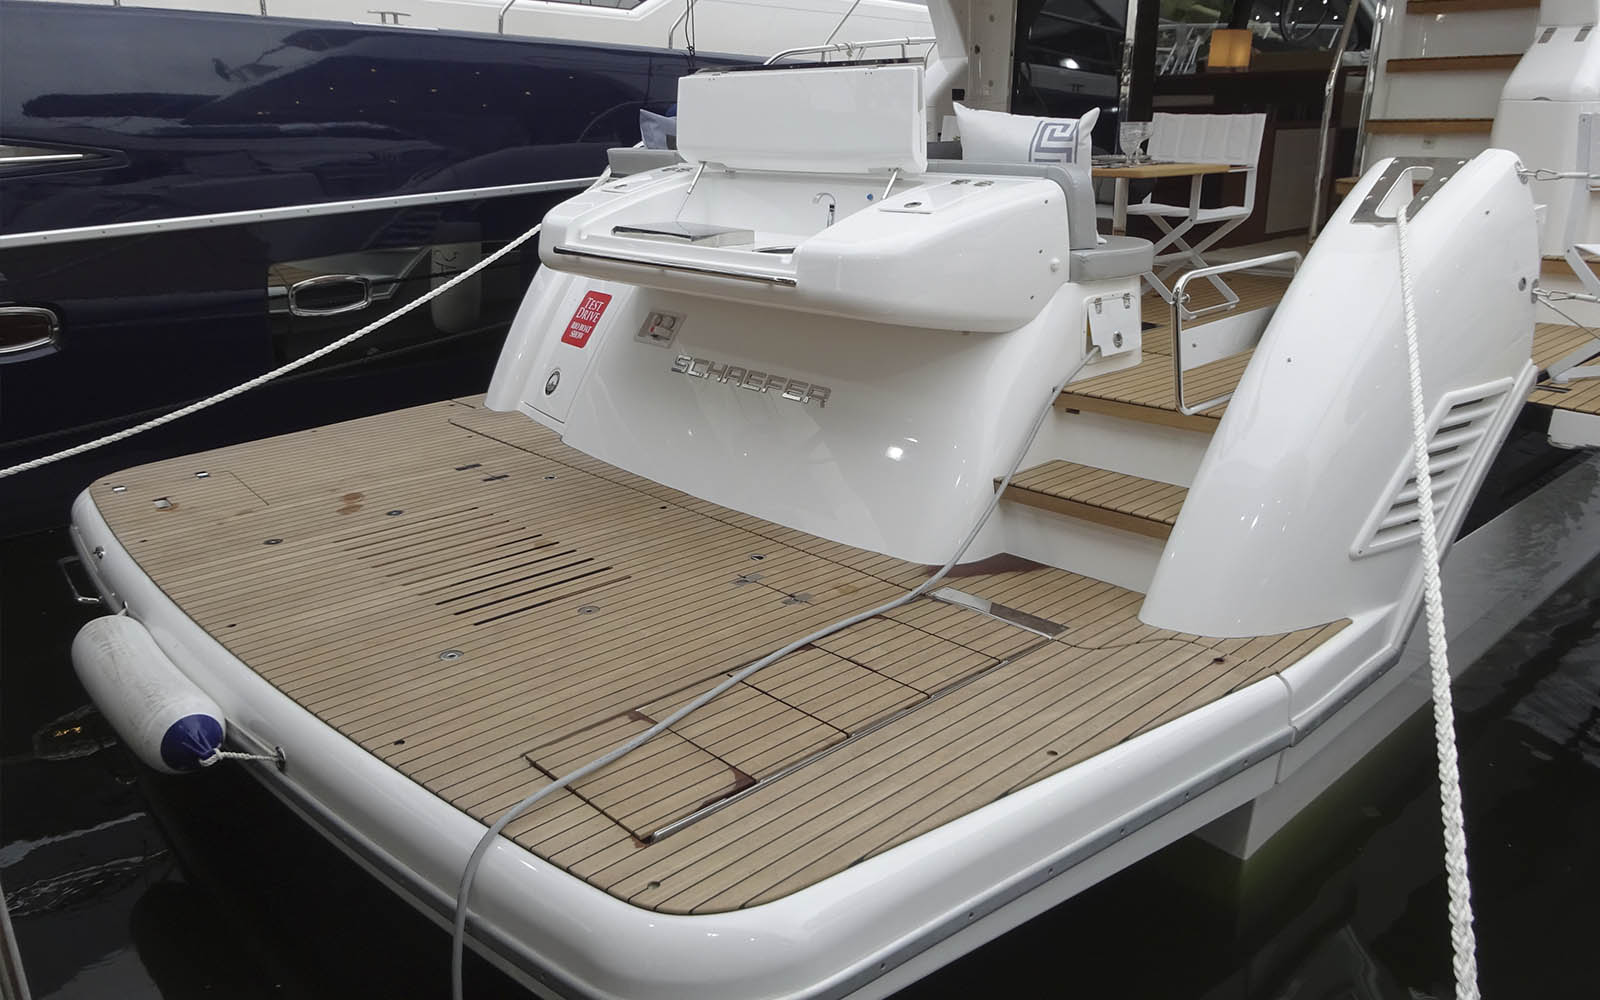 Confira os detalhes da nova Schaefer 580-boatshopping